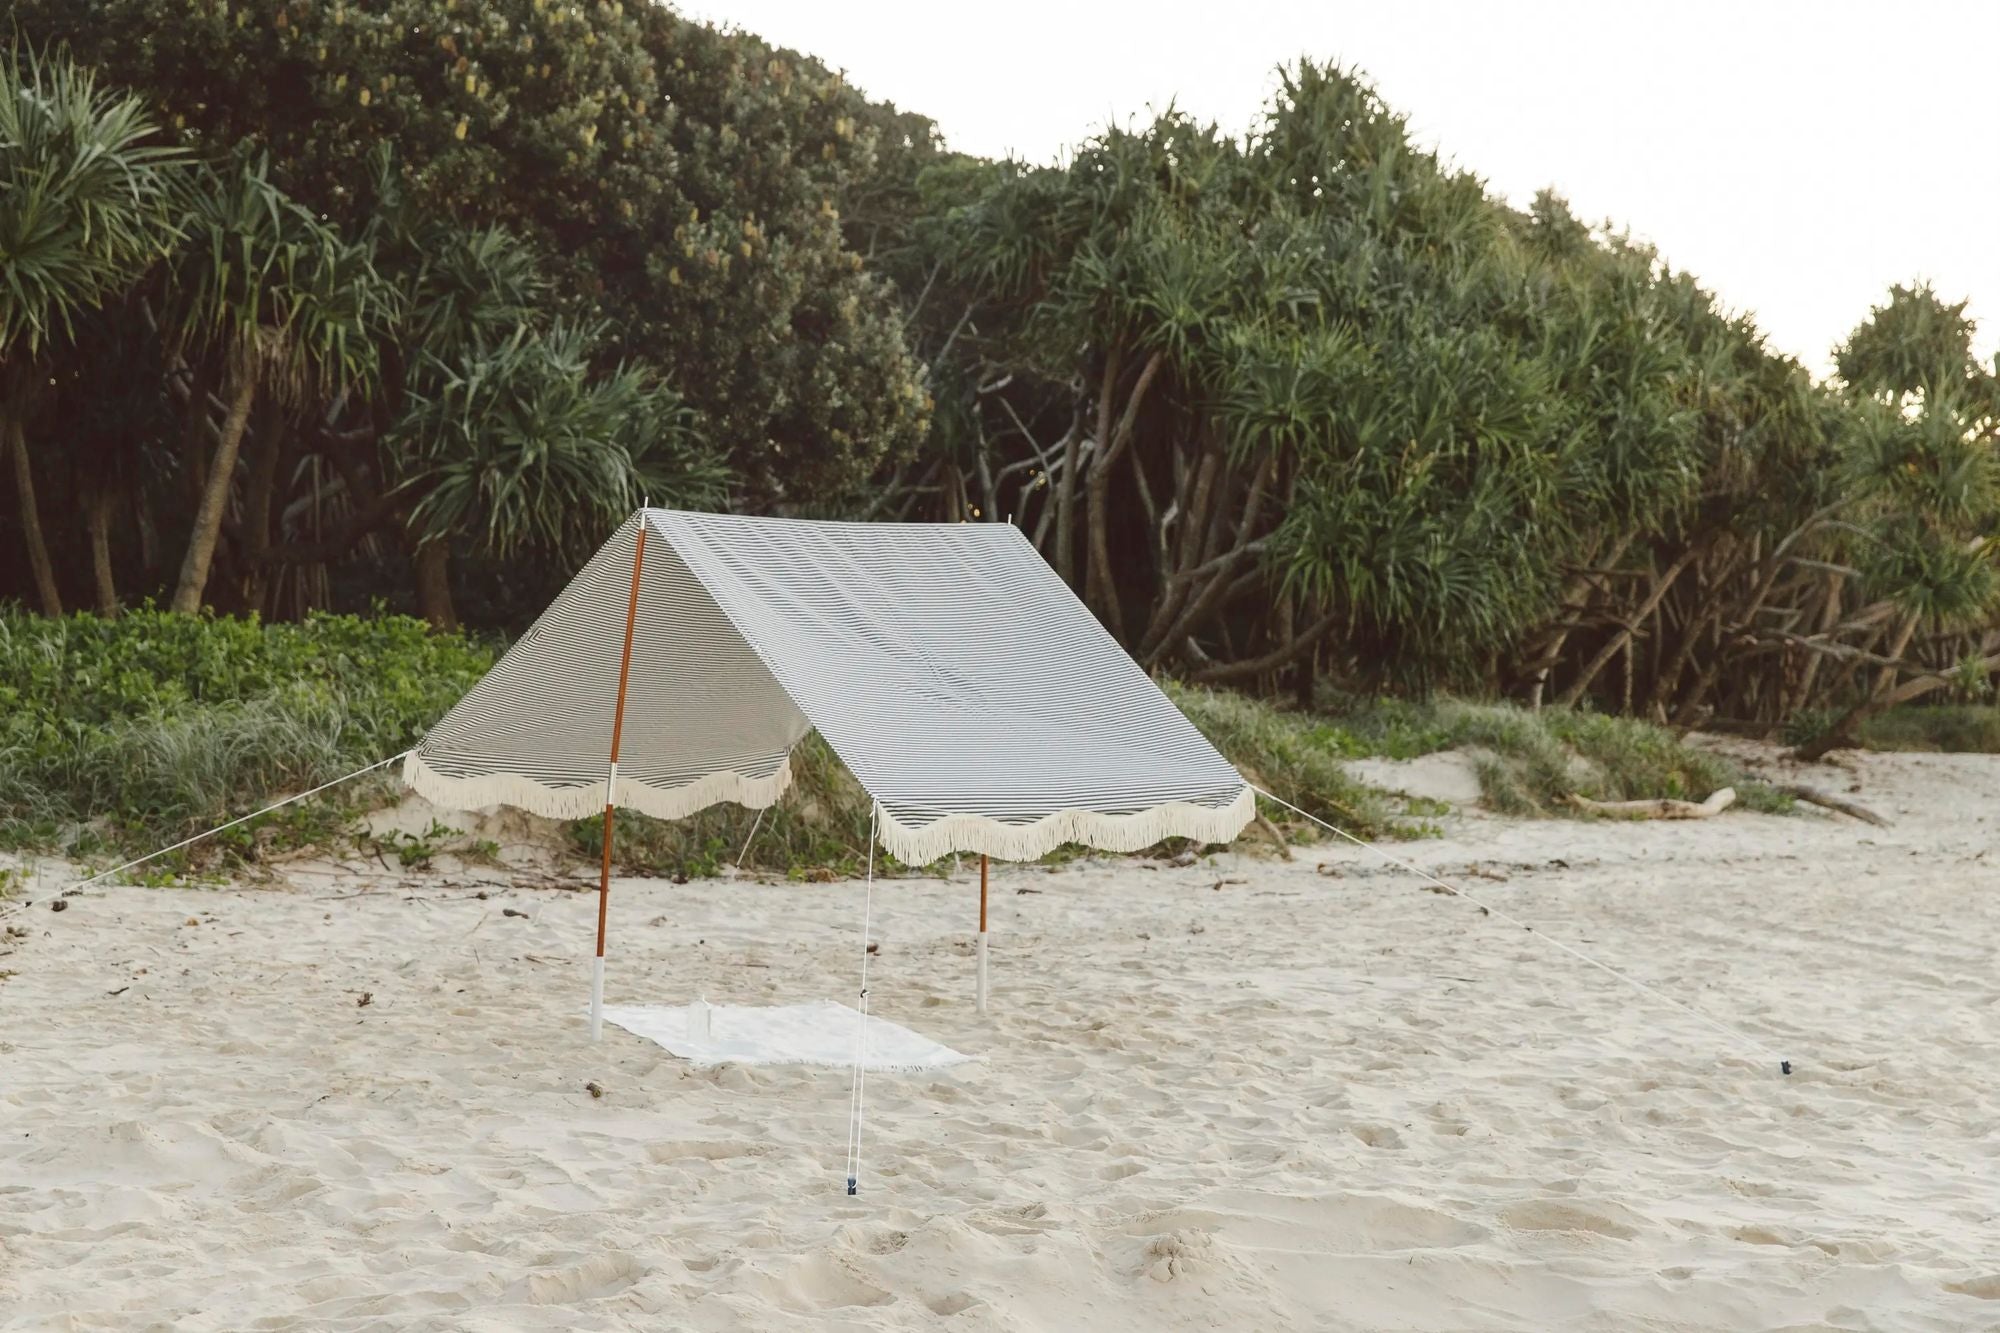 Lauren's Navy Striped Beach Tent on the sand